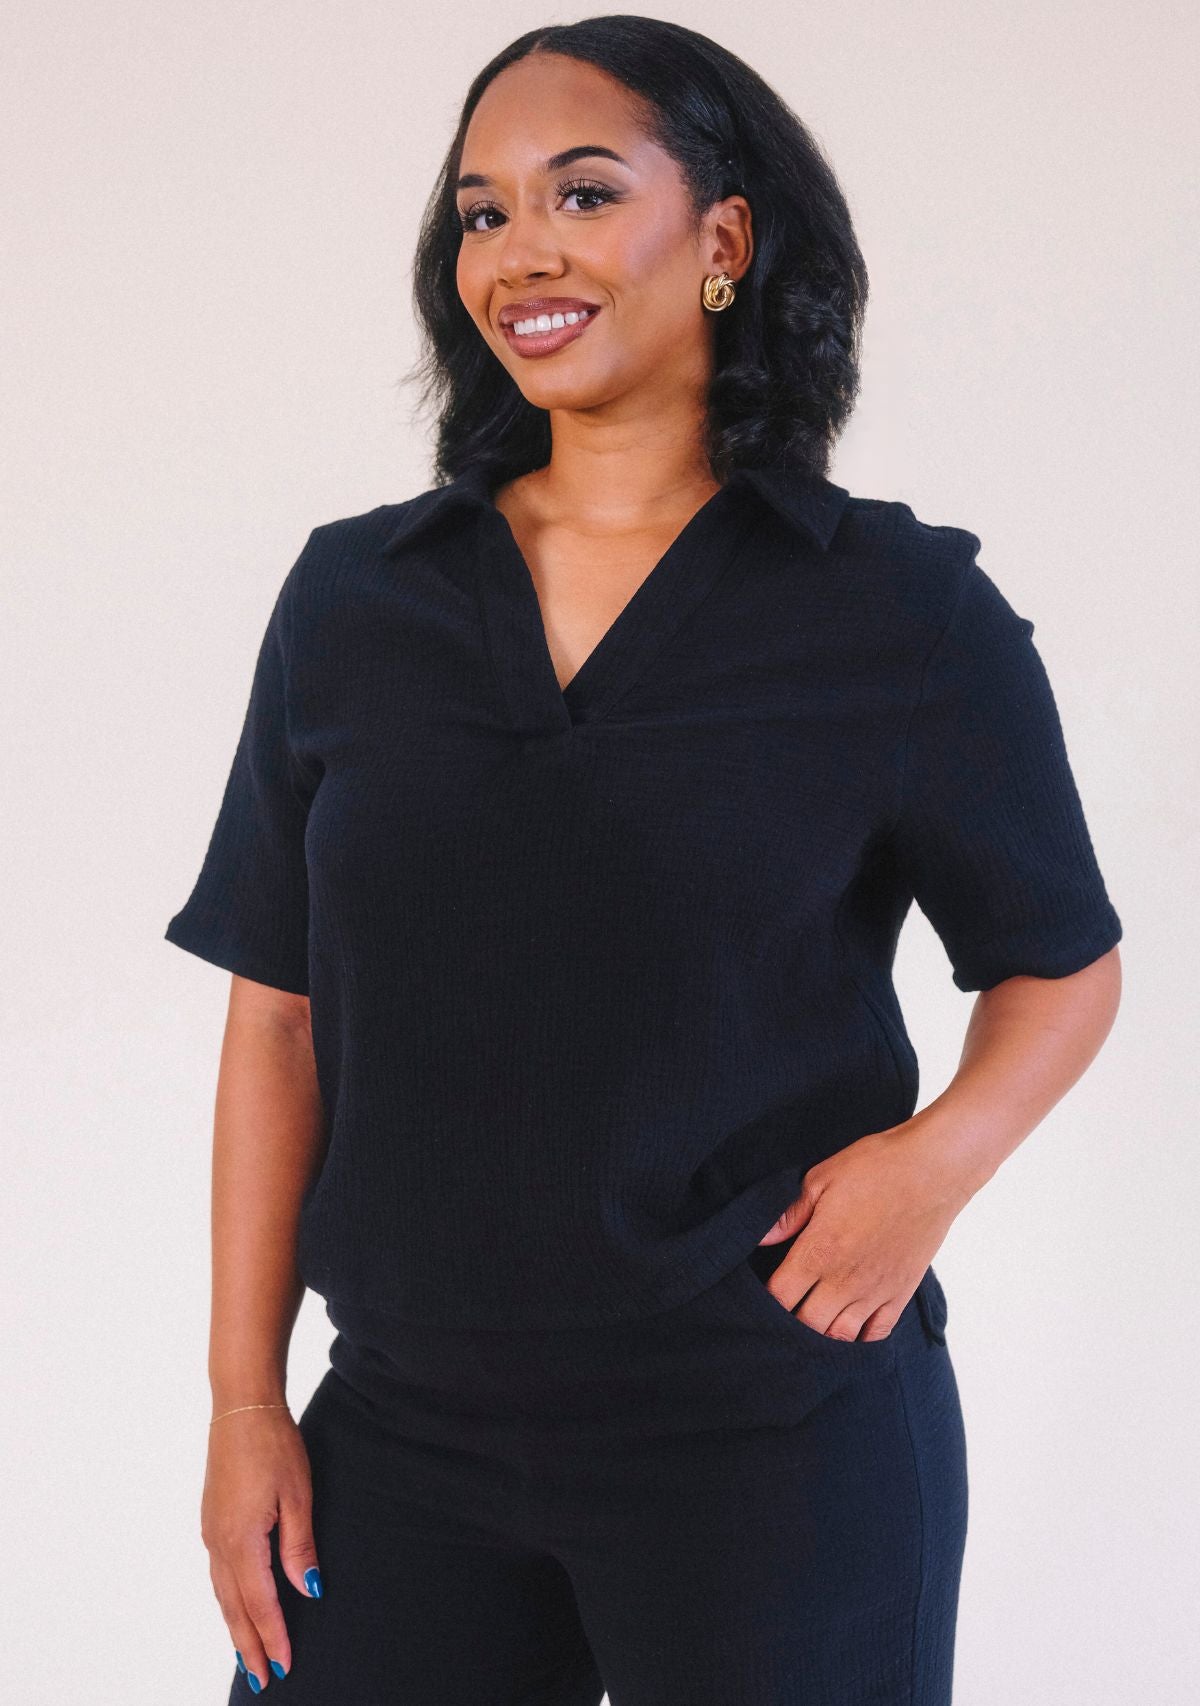 Poplinen x Simone Women's Organic Cotton Gauze Summer Shirt color Black sizes XS-3X made ethically in California